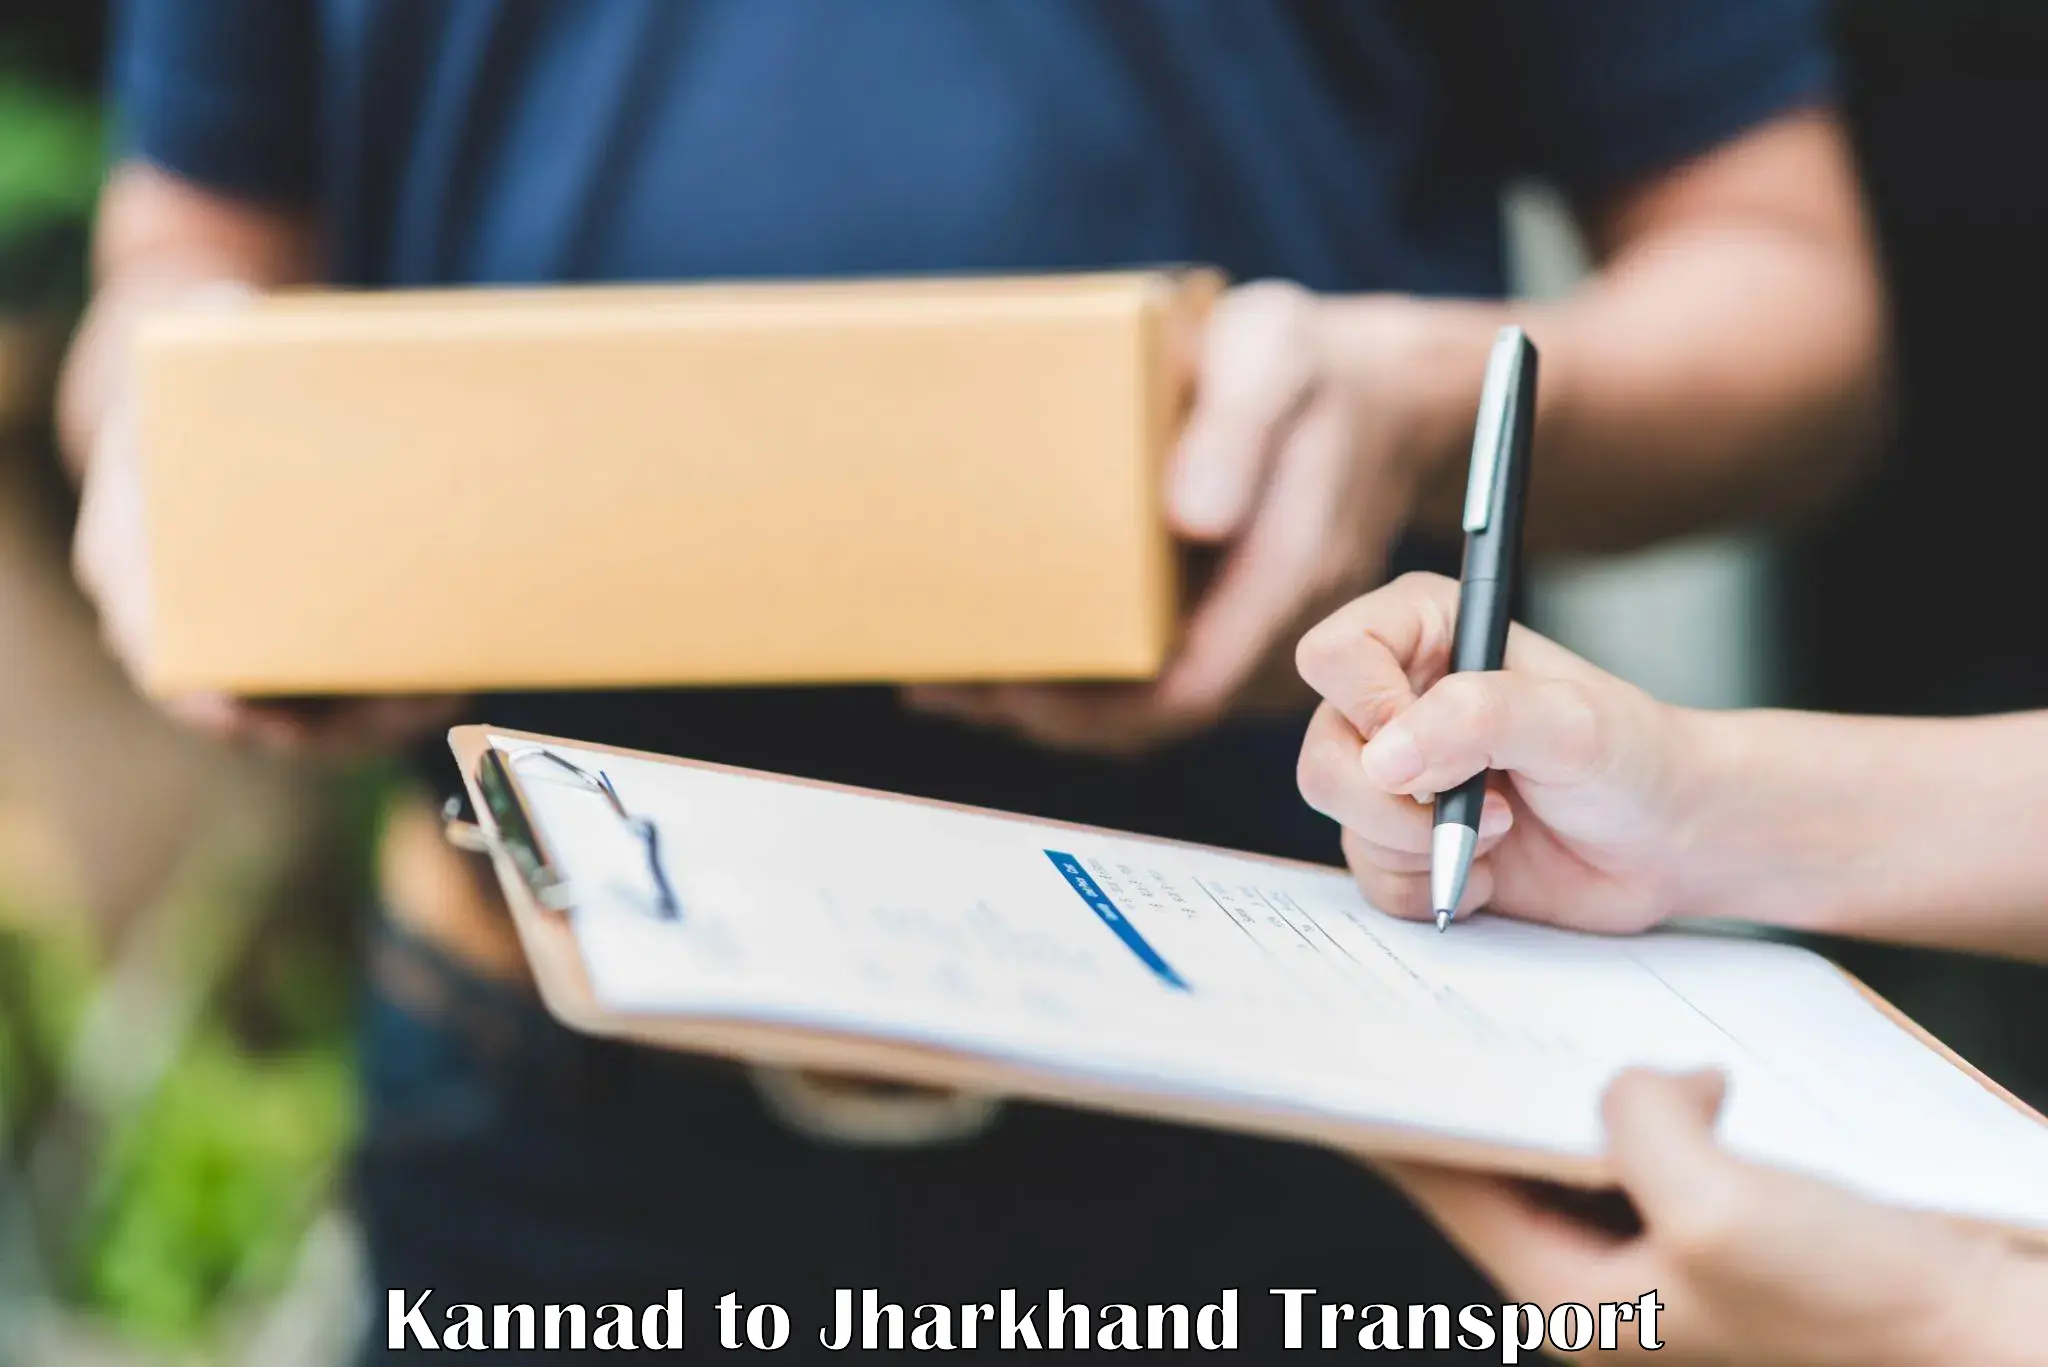 Furniture transport service Kannad to Rajmahal